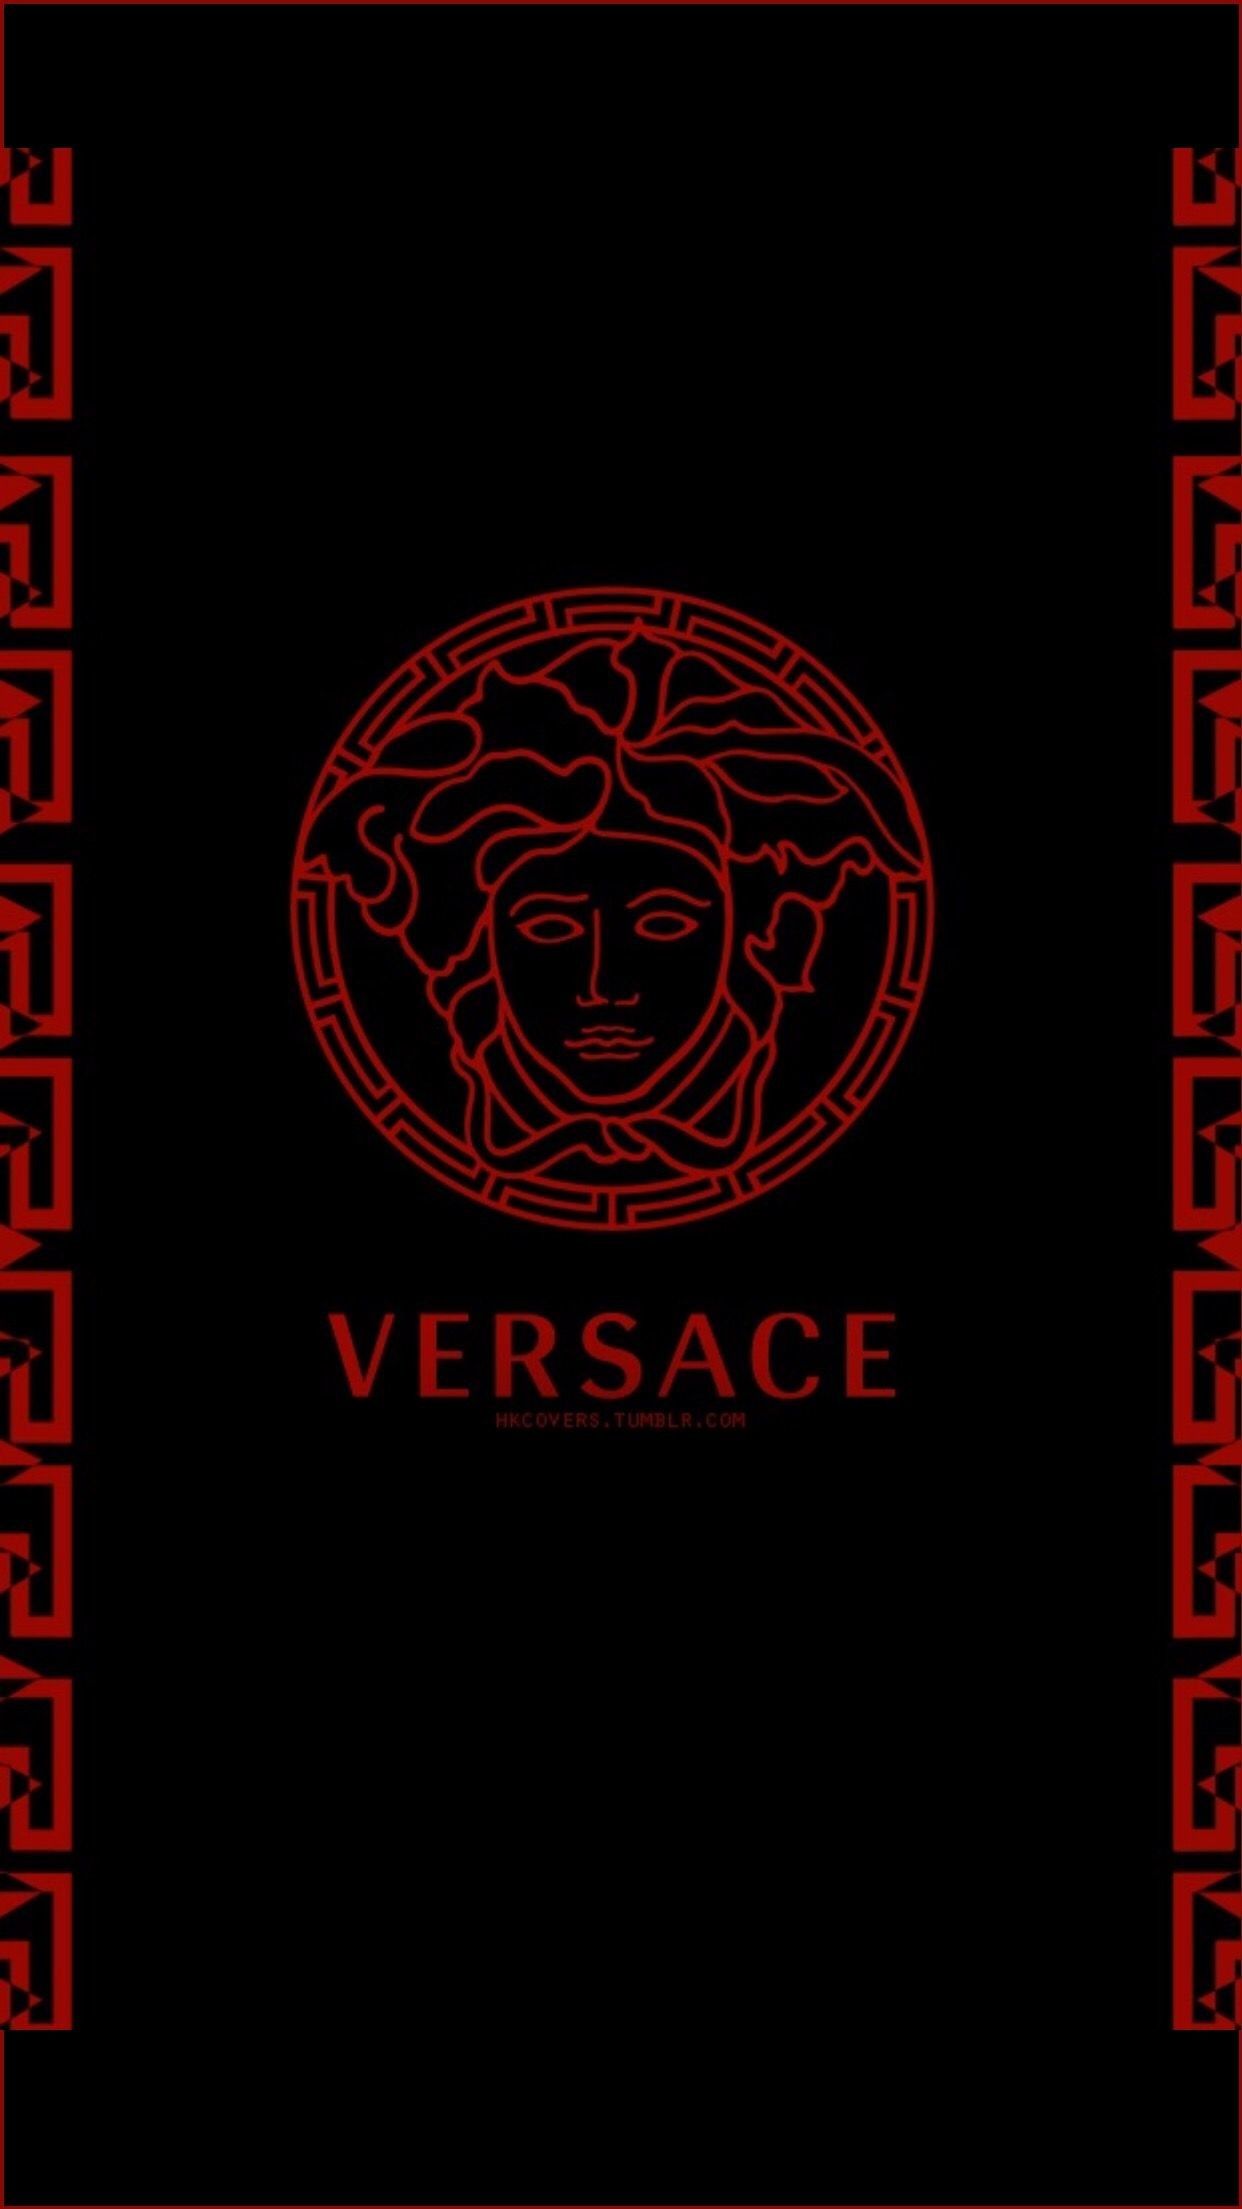 Versace Screensaver Wallpapers